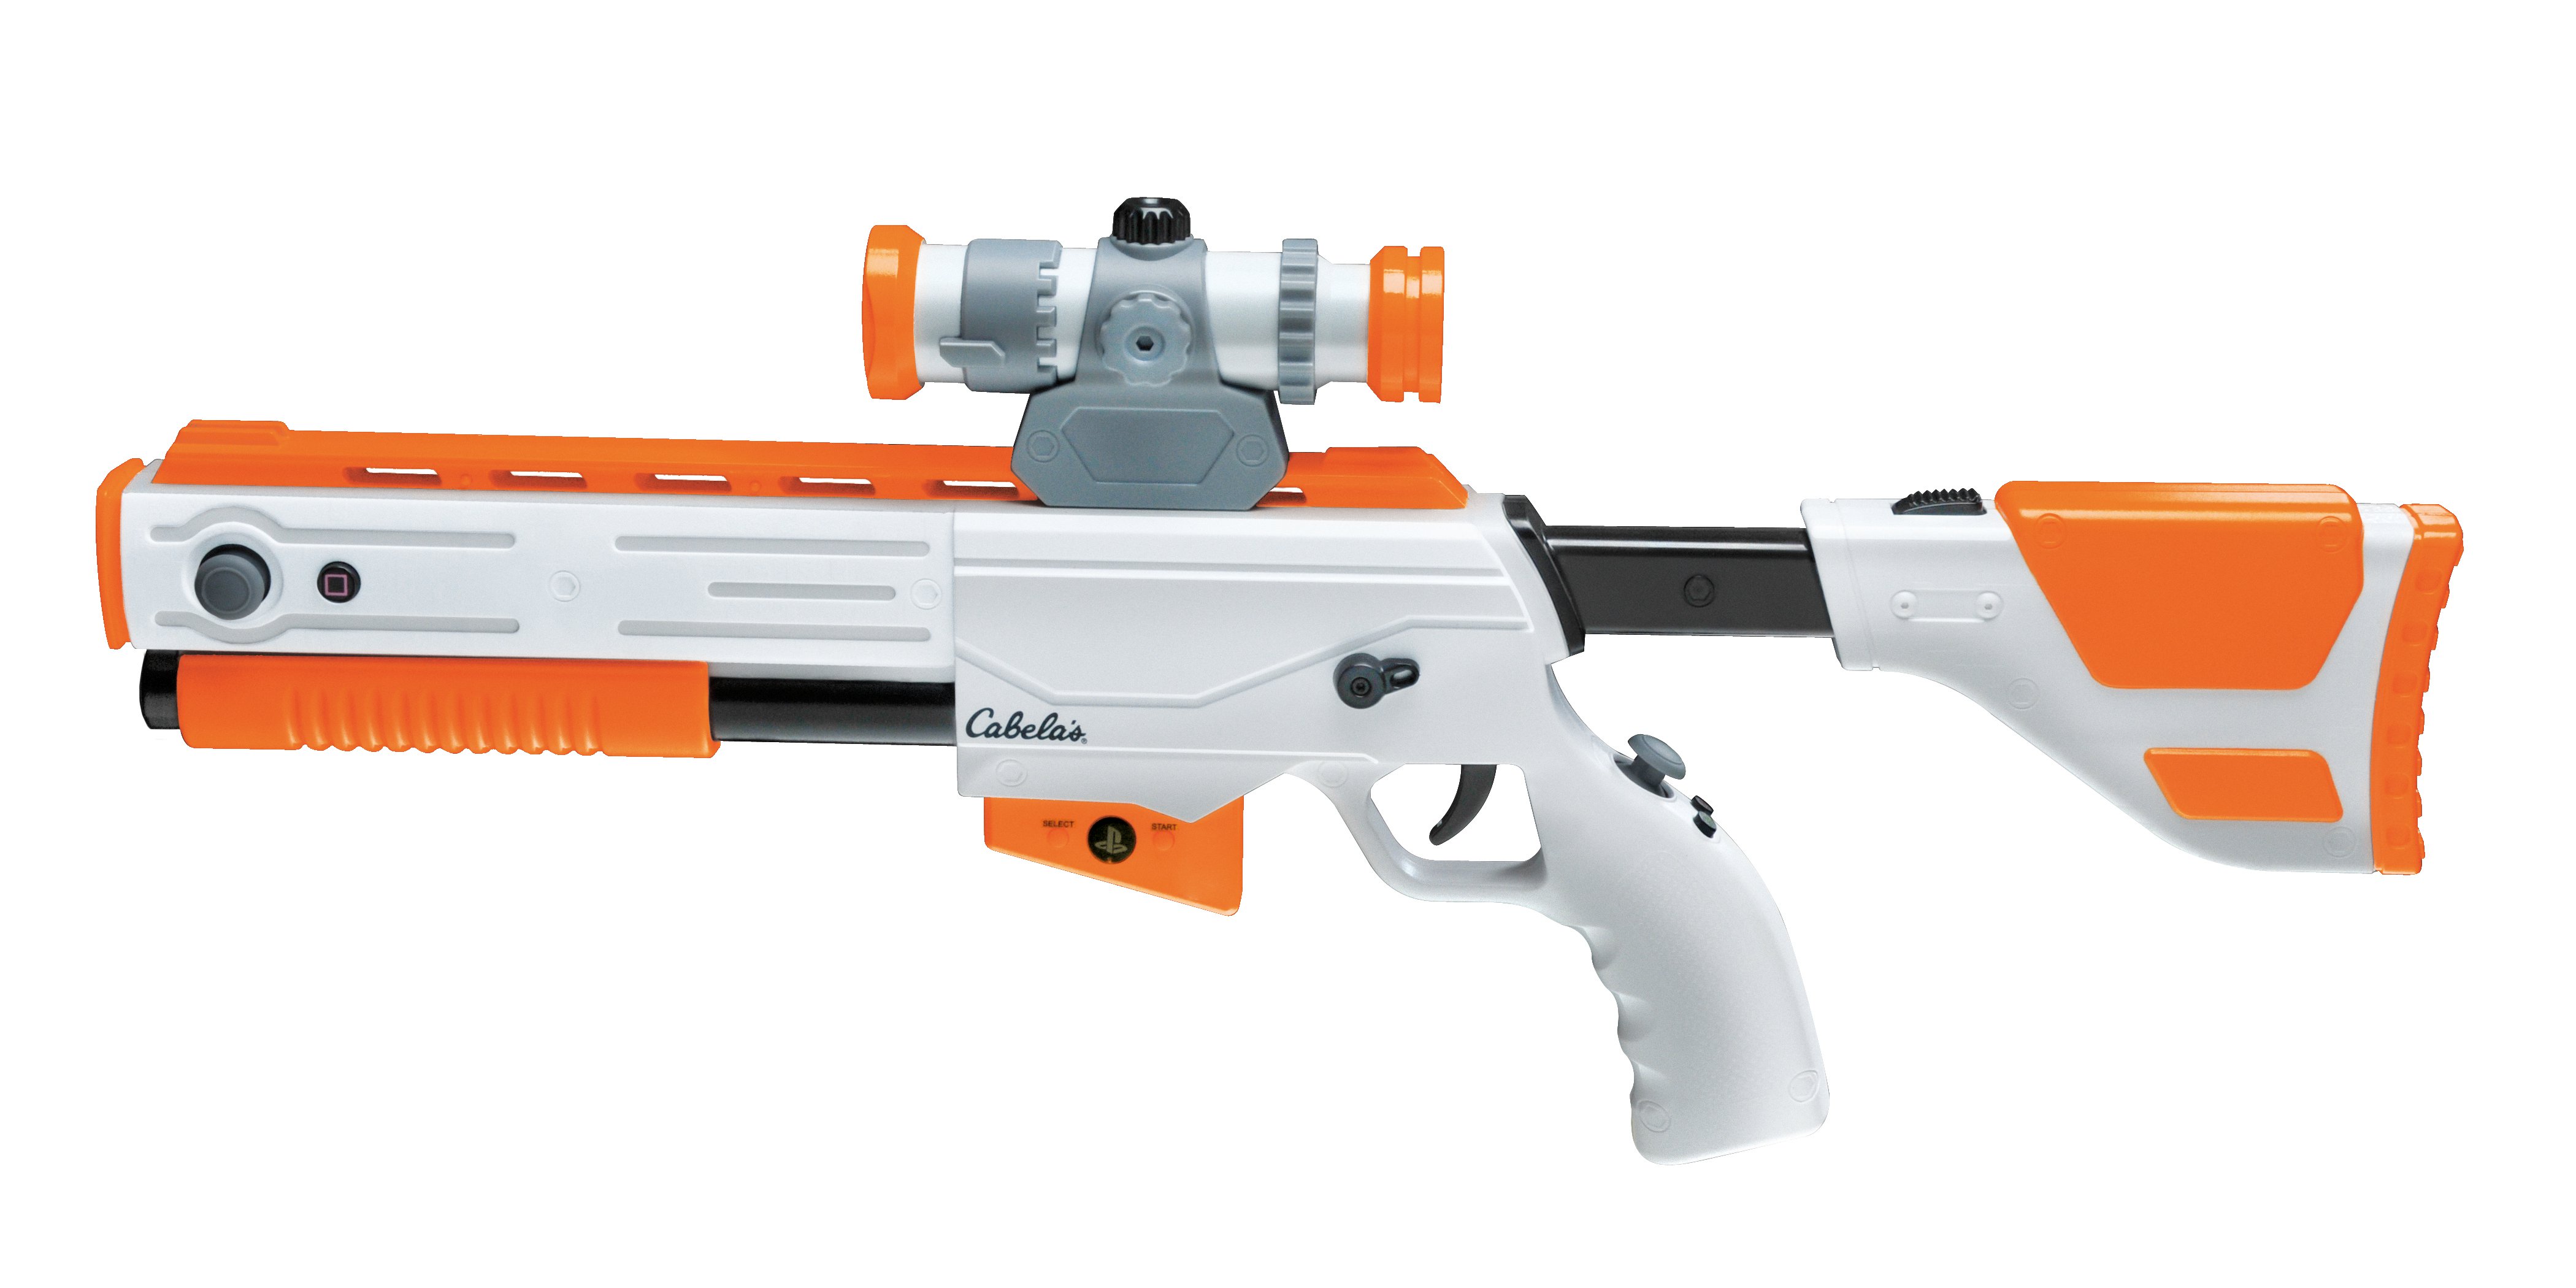 Ps3 light. Ружье для Xbox 360. Xbox 360 Gun Controller. Gun shot Elite Xbox 360. Автомат для Xbox 360.